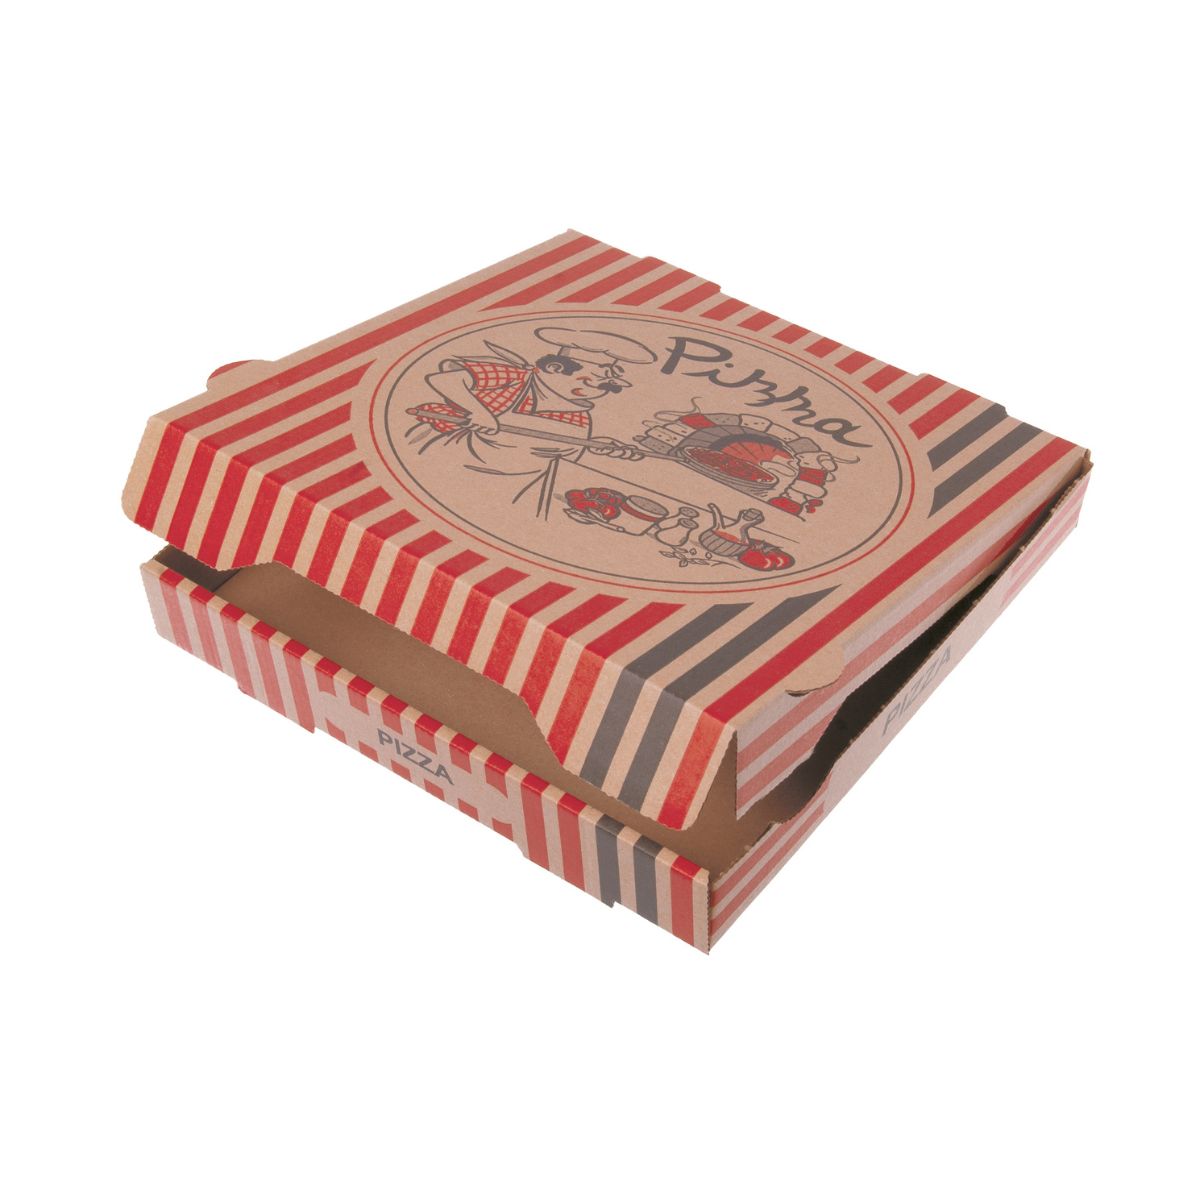 Pizzabox 26x26x4cm | Kraft rot-braun